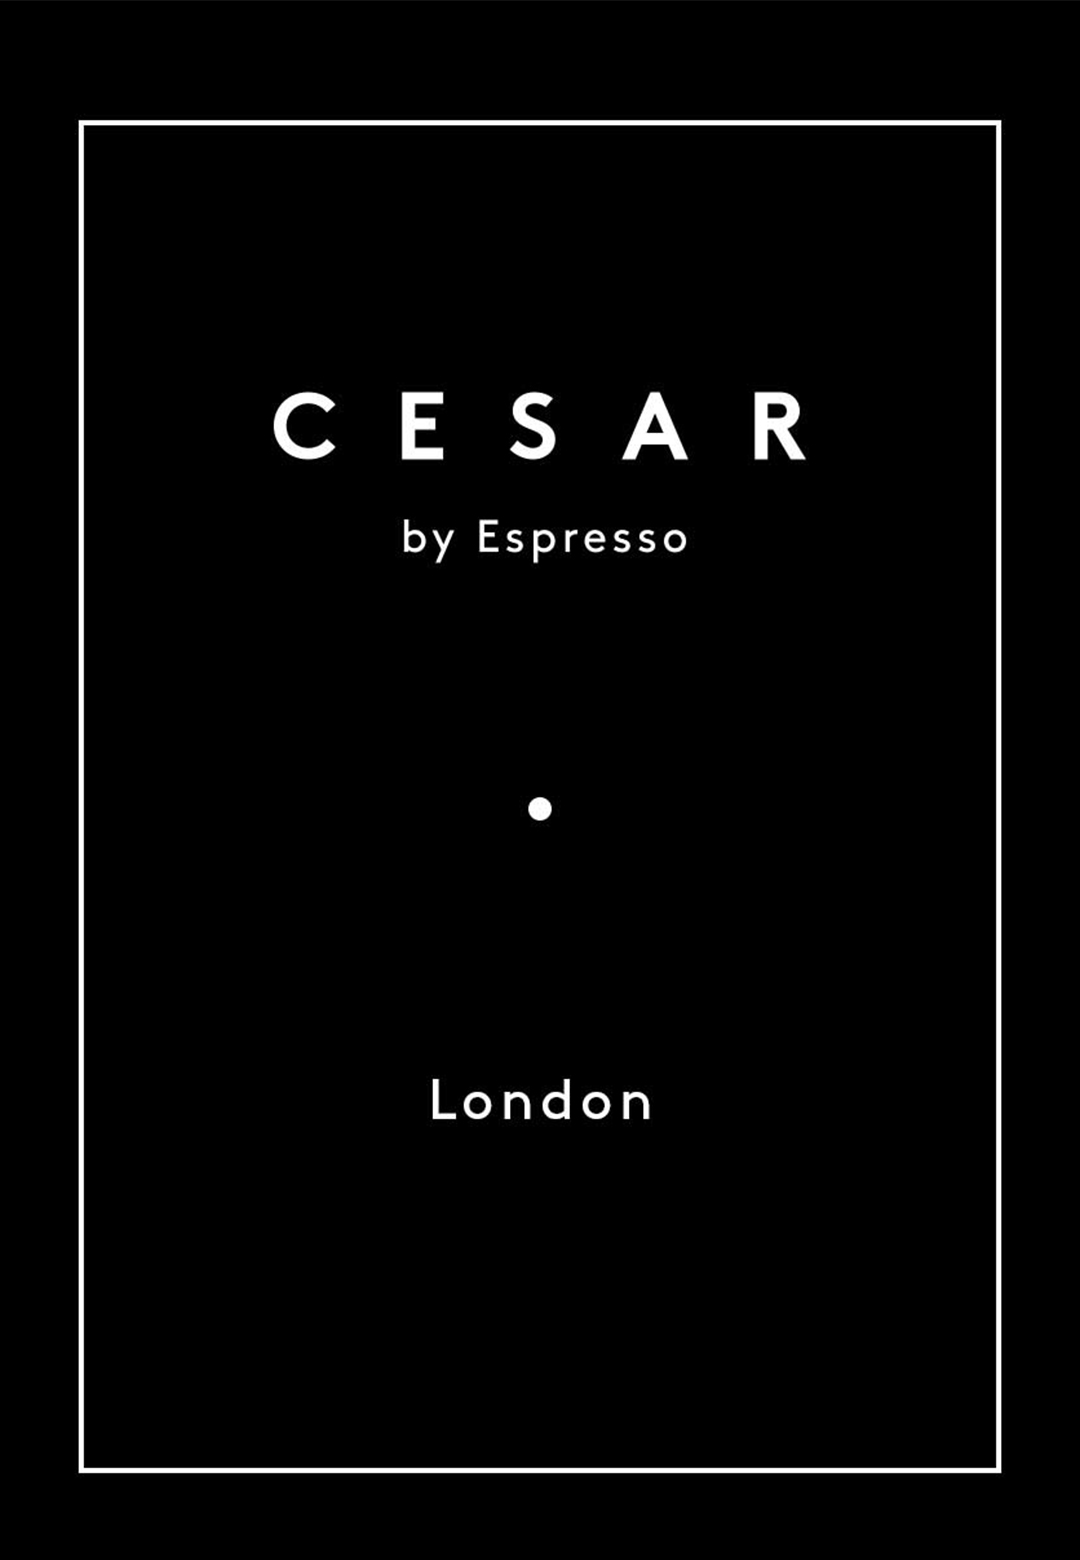 Cesar brings Italian craftsmanship to London's Chelsea Harbour Design Centre